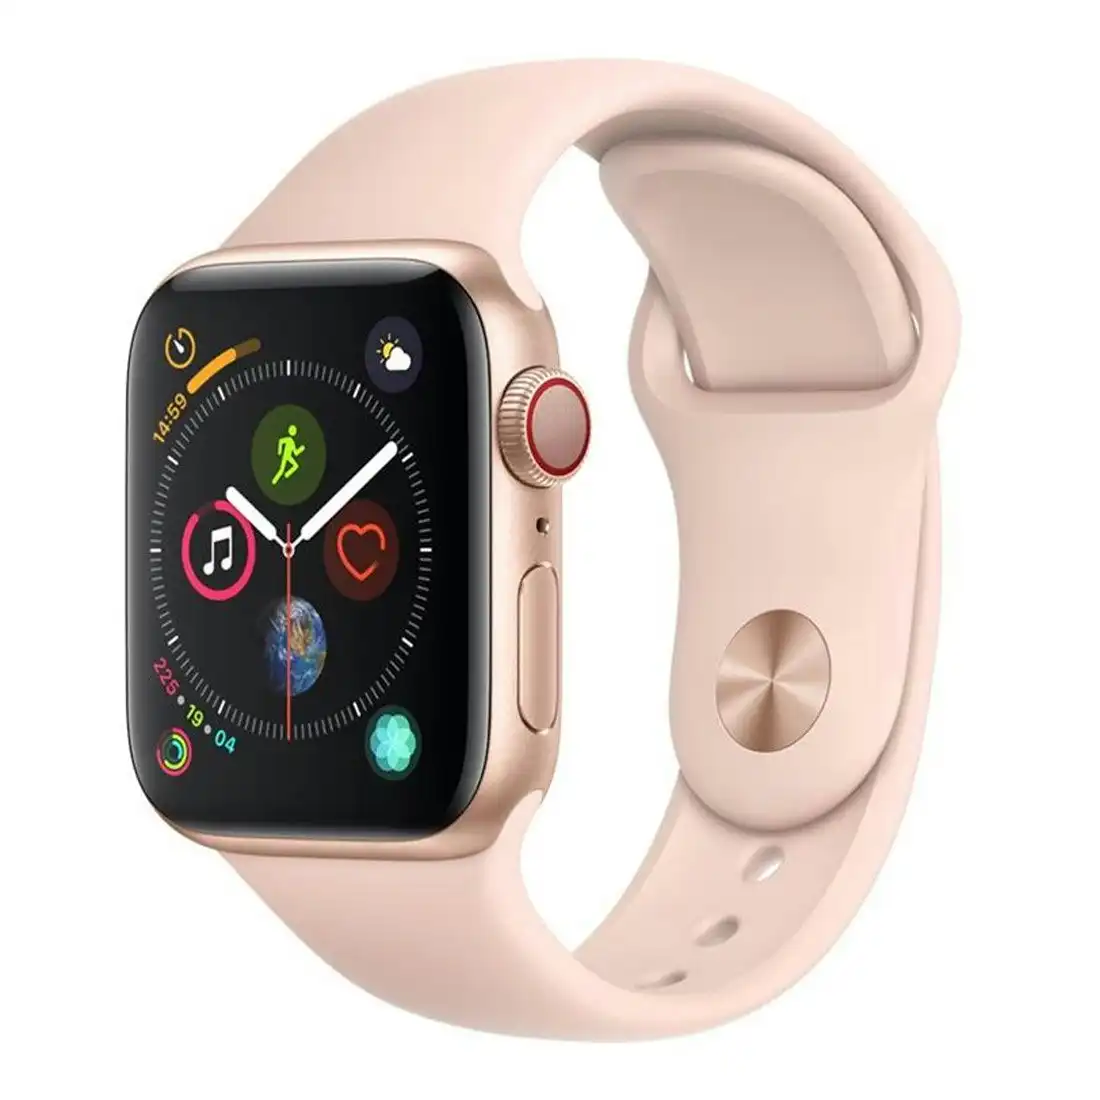 Apple Watch 44mm S4 (Cellular) - Gold Al Case w/ Pink Sand Sport Band [Refur] -Excellent